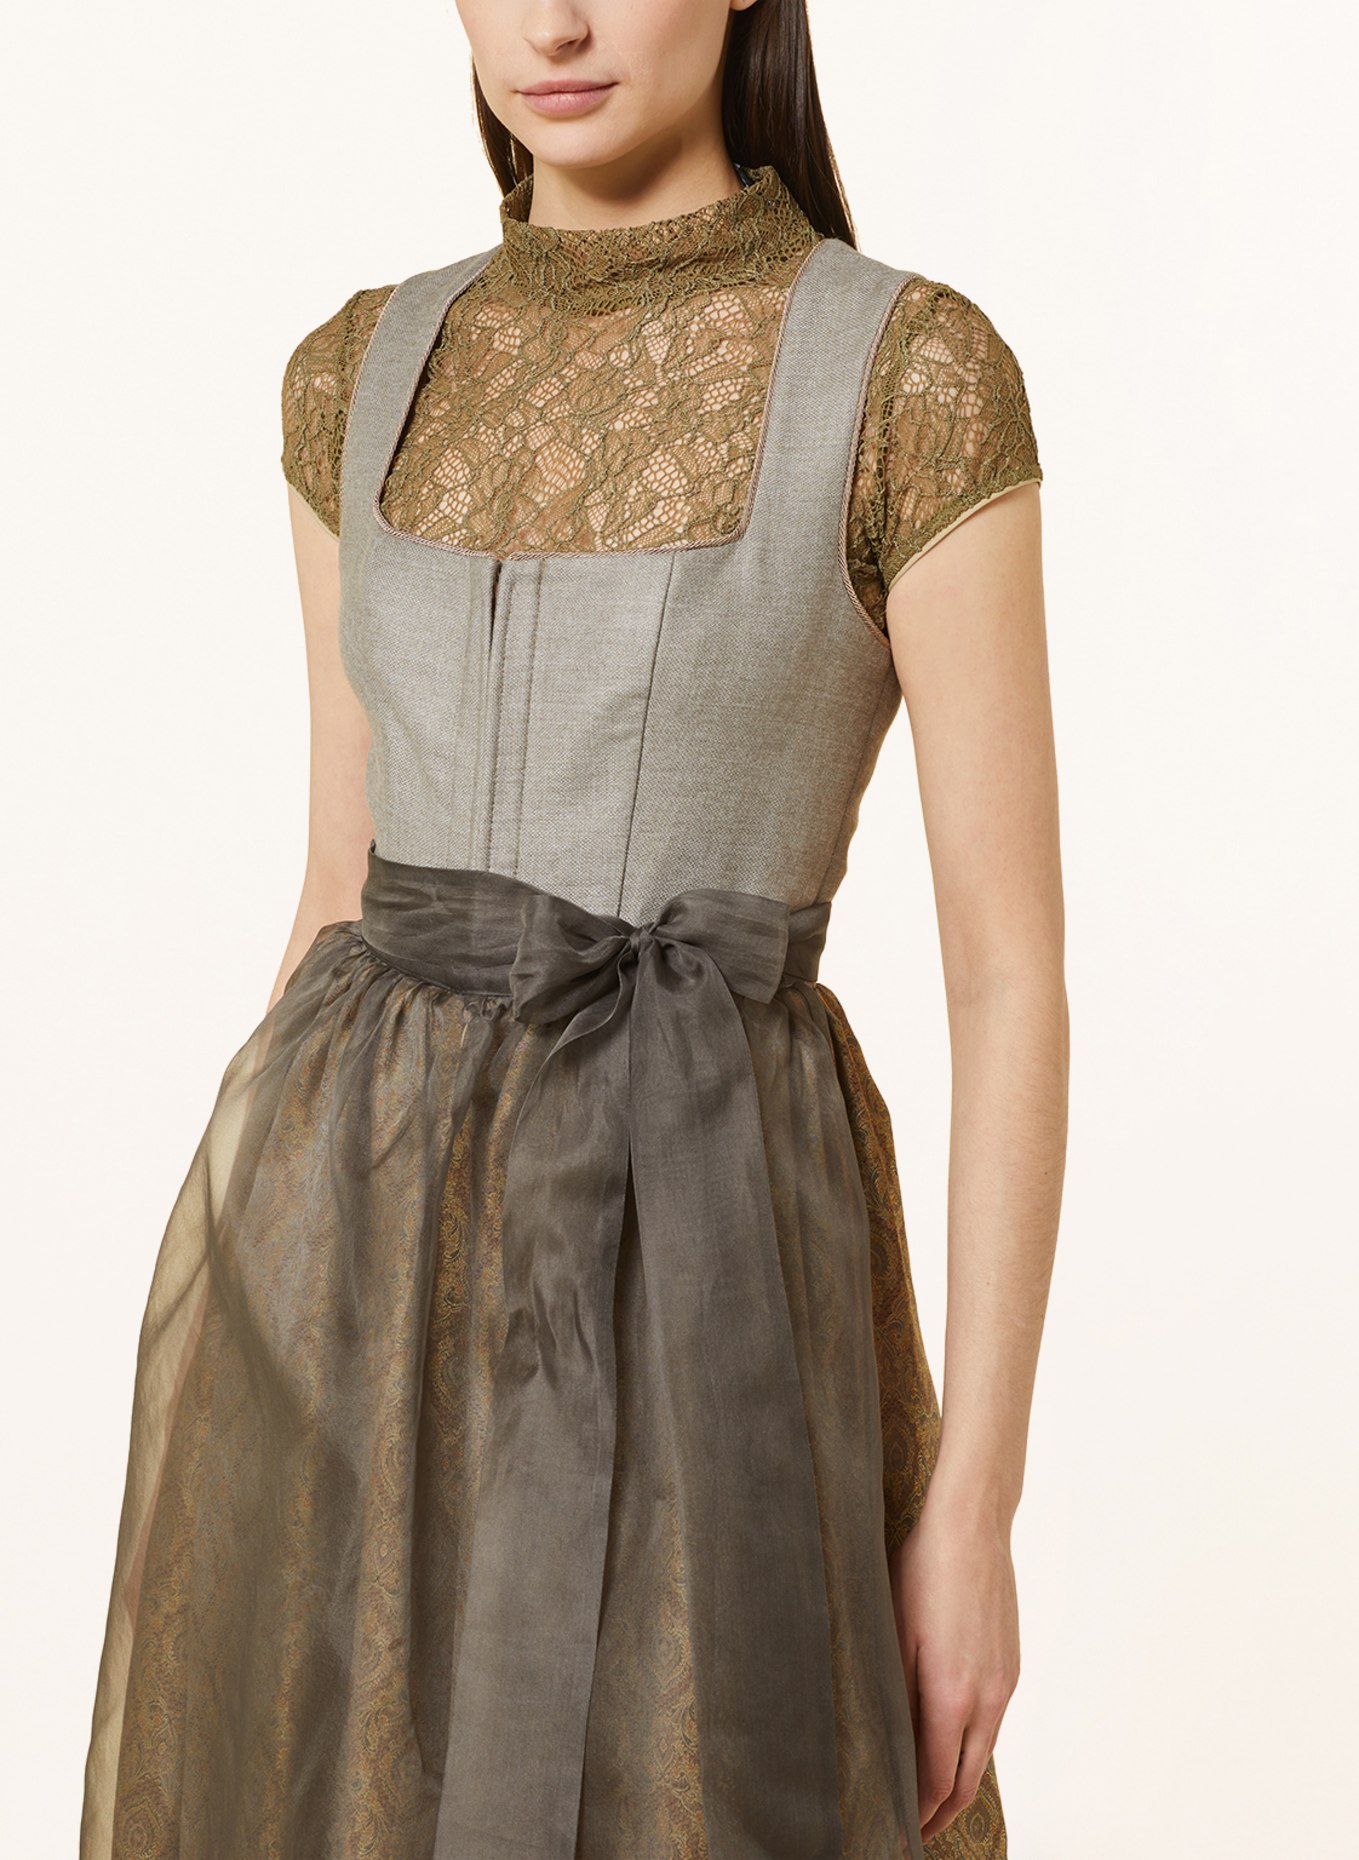 KINGA MATHE Dirndl blouse CHARLOTTE made of lace, Color: OLIVE (Image 3)